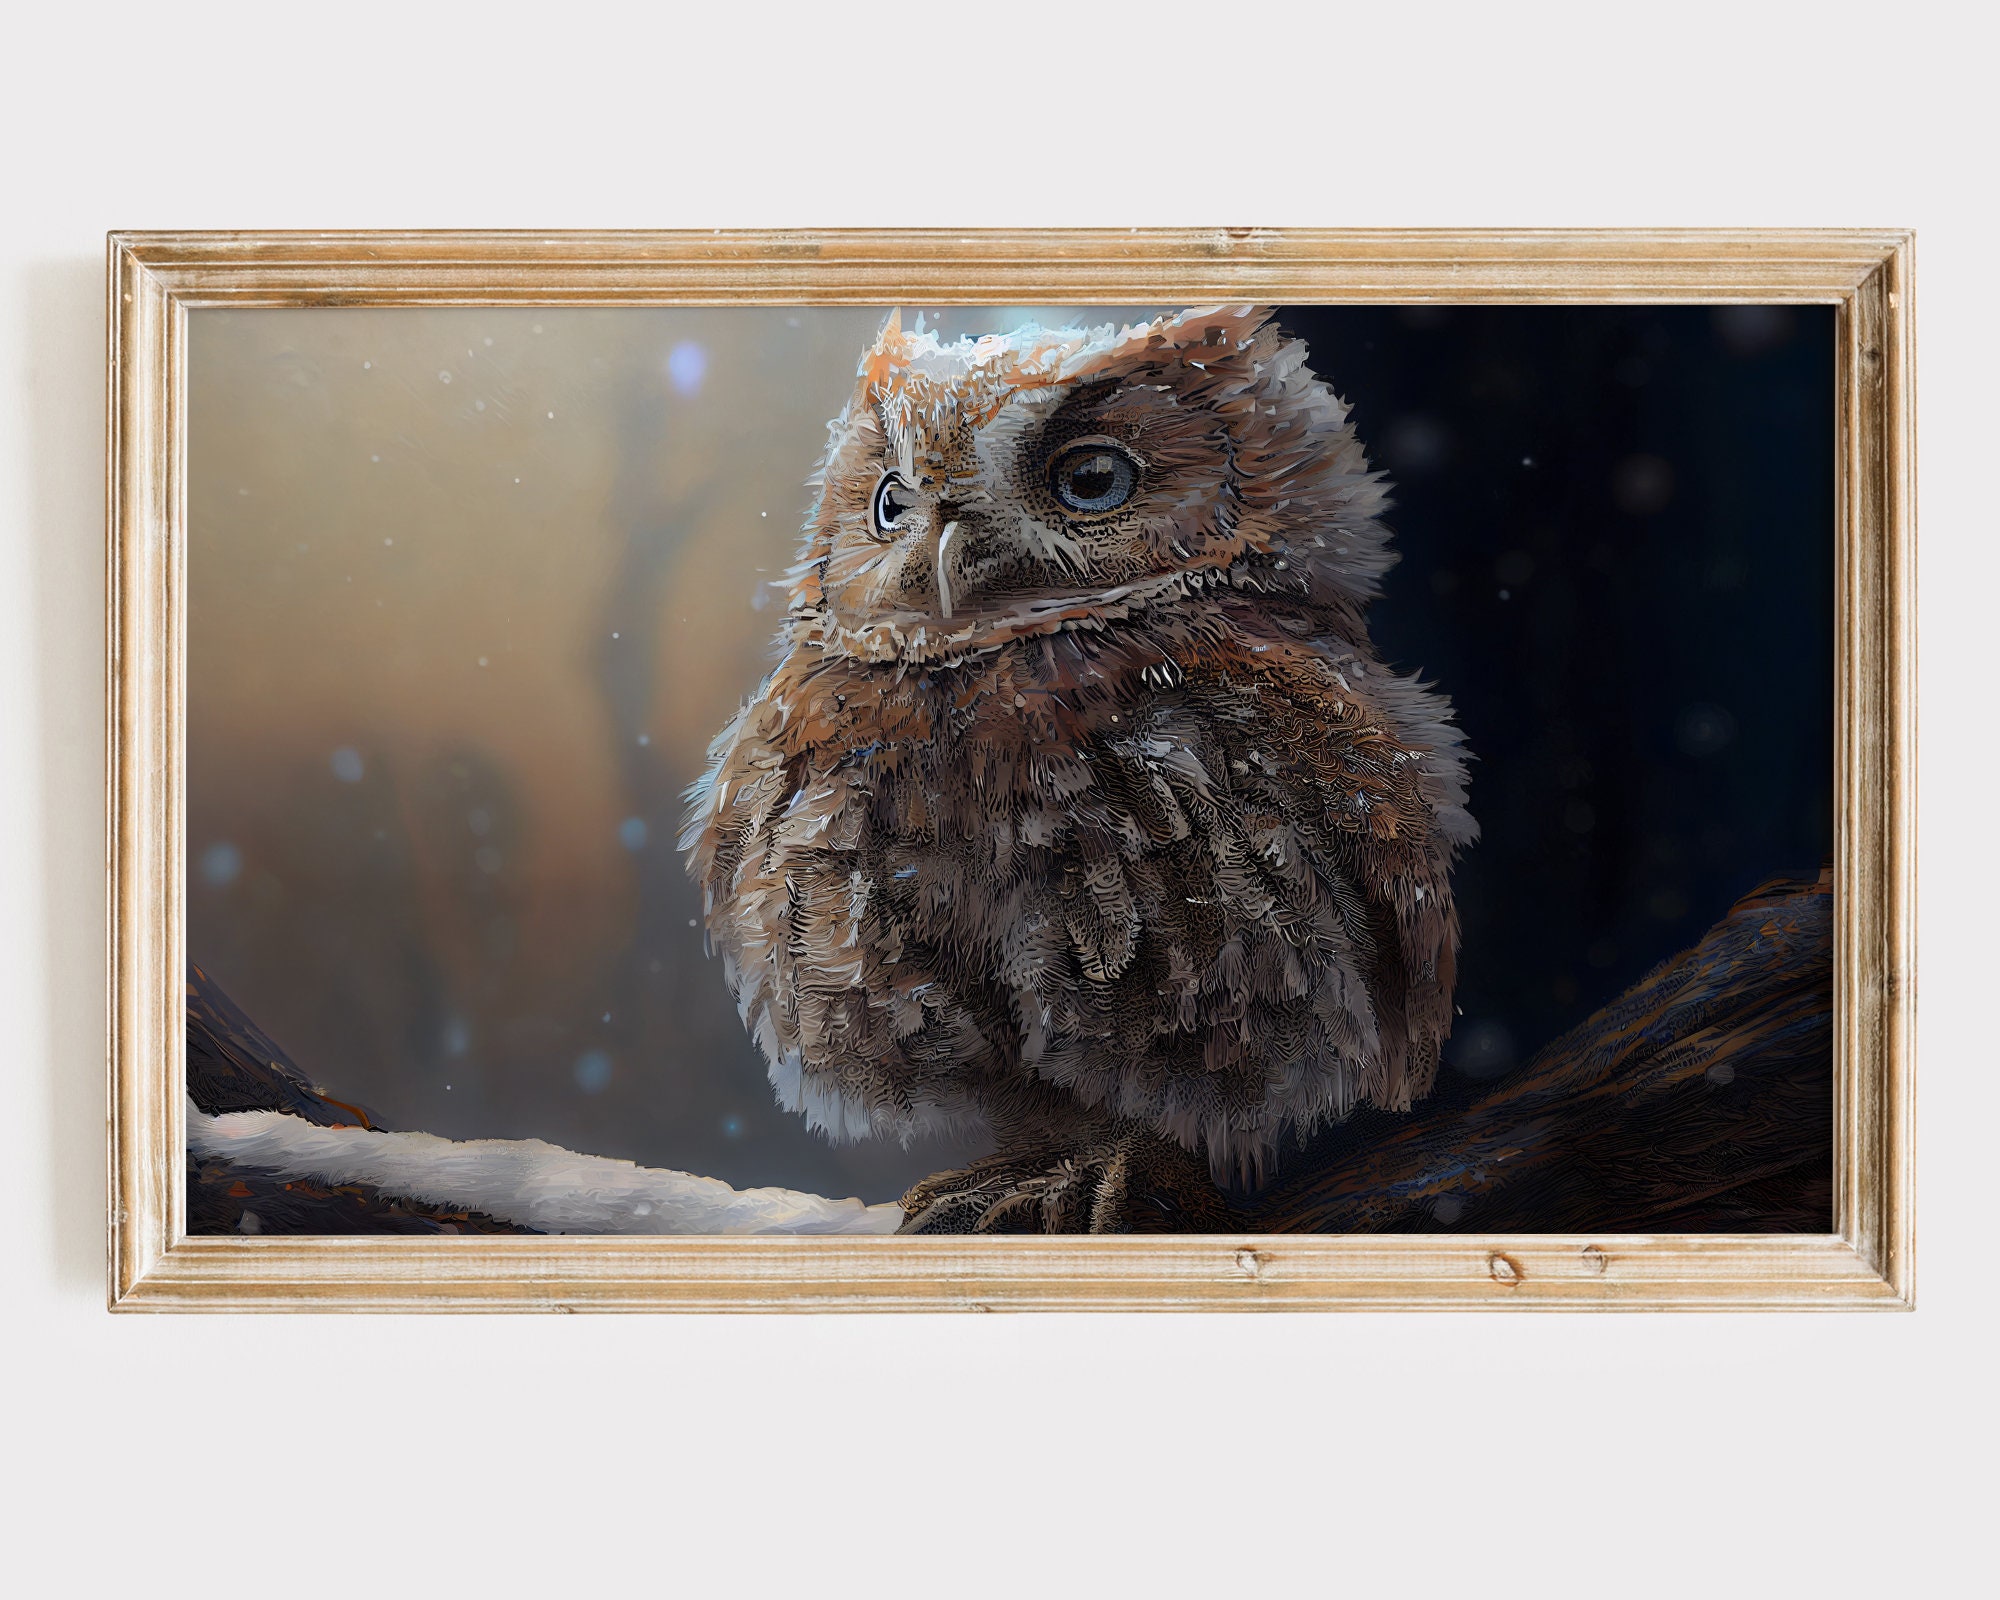 Samsung Frame TV Art Christmas - Baby Owl Painting - Digital Download for Samsung Frame